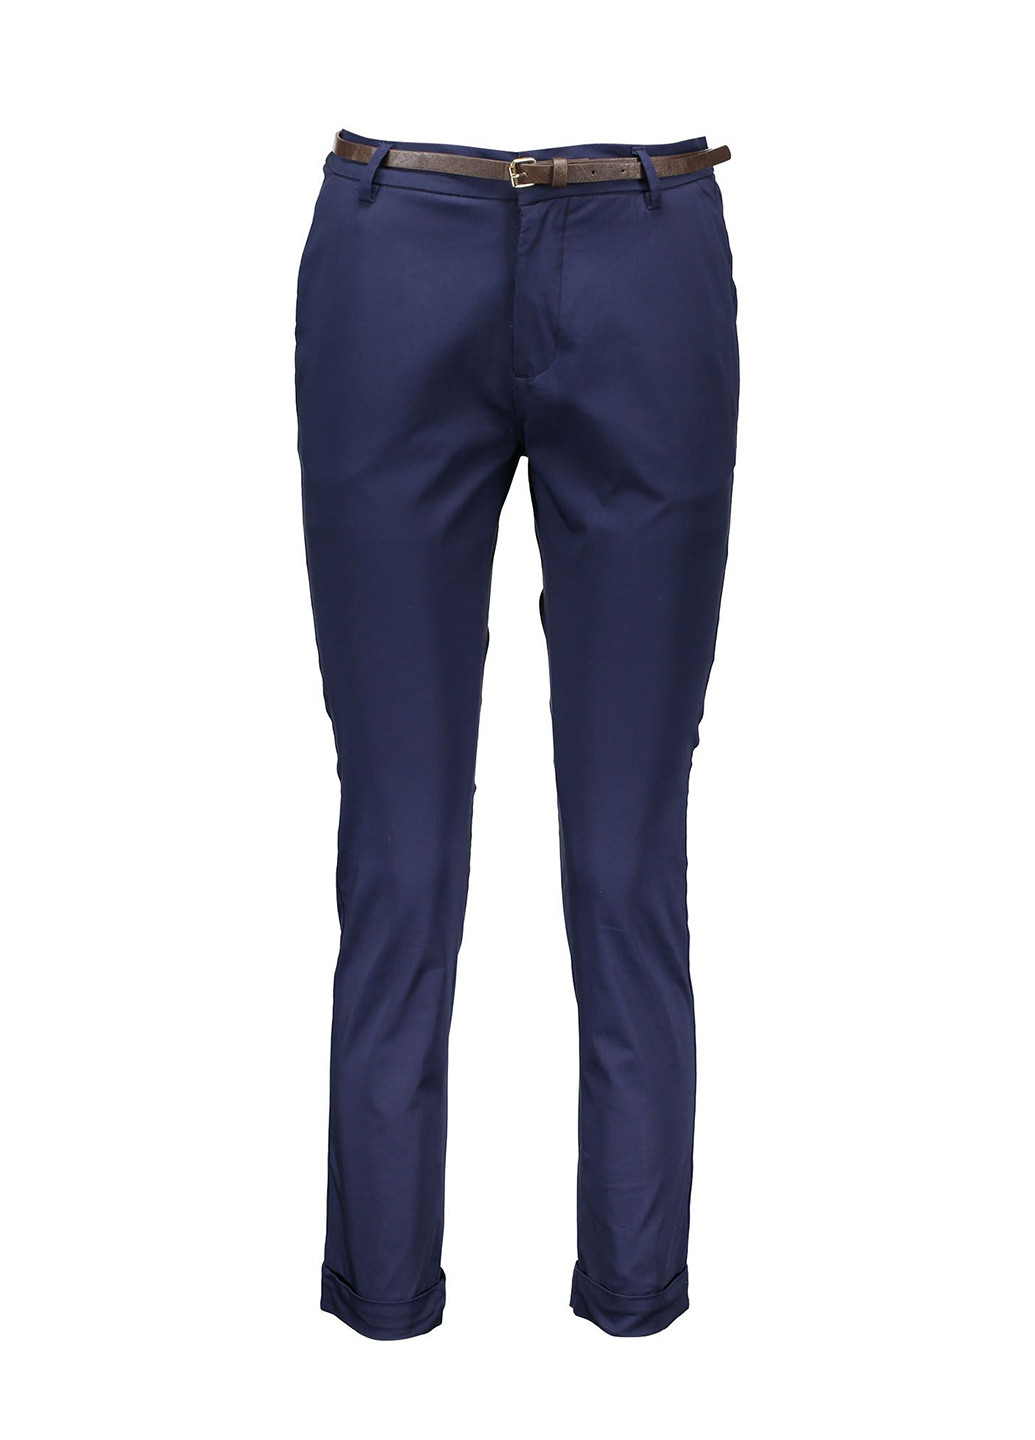 Темно-синие кэжуал демисезонные со средней талией брюки Piazza Italia